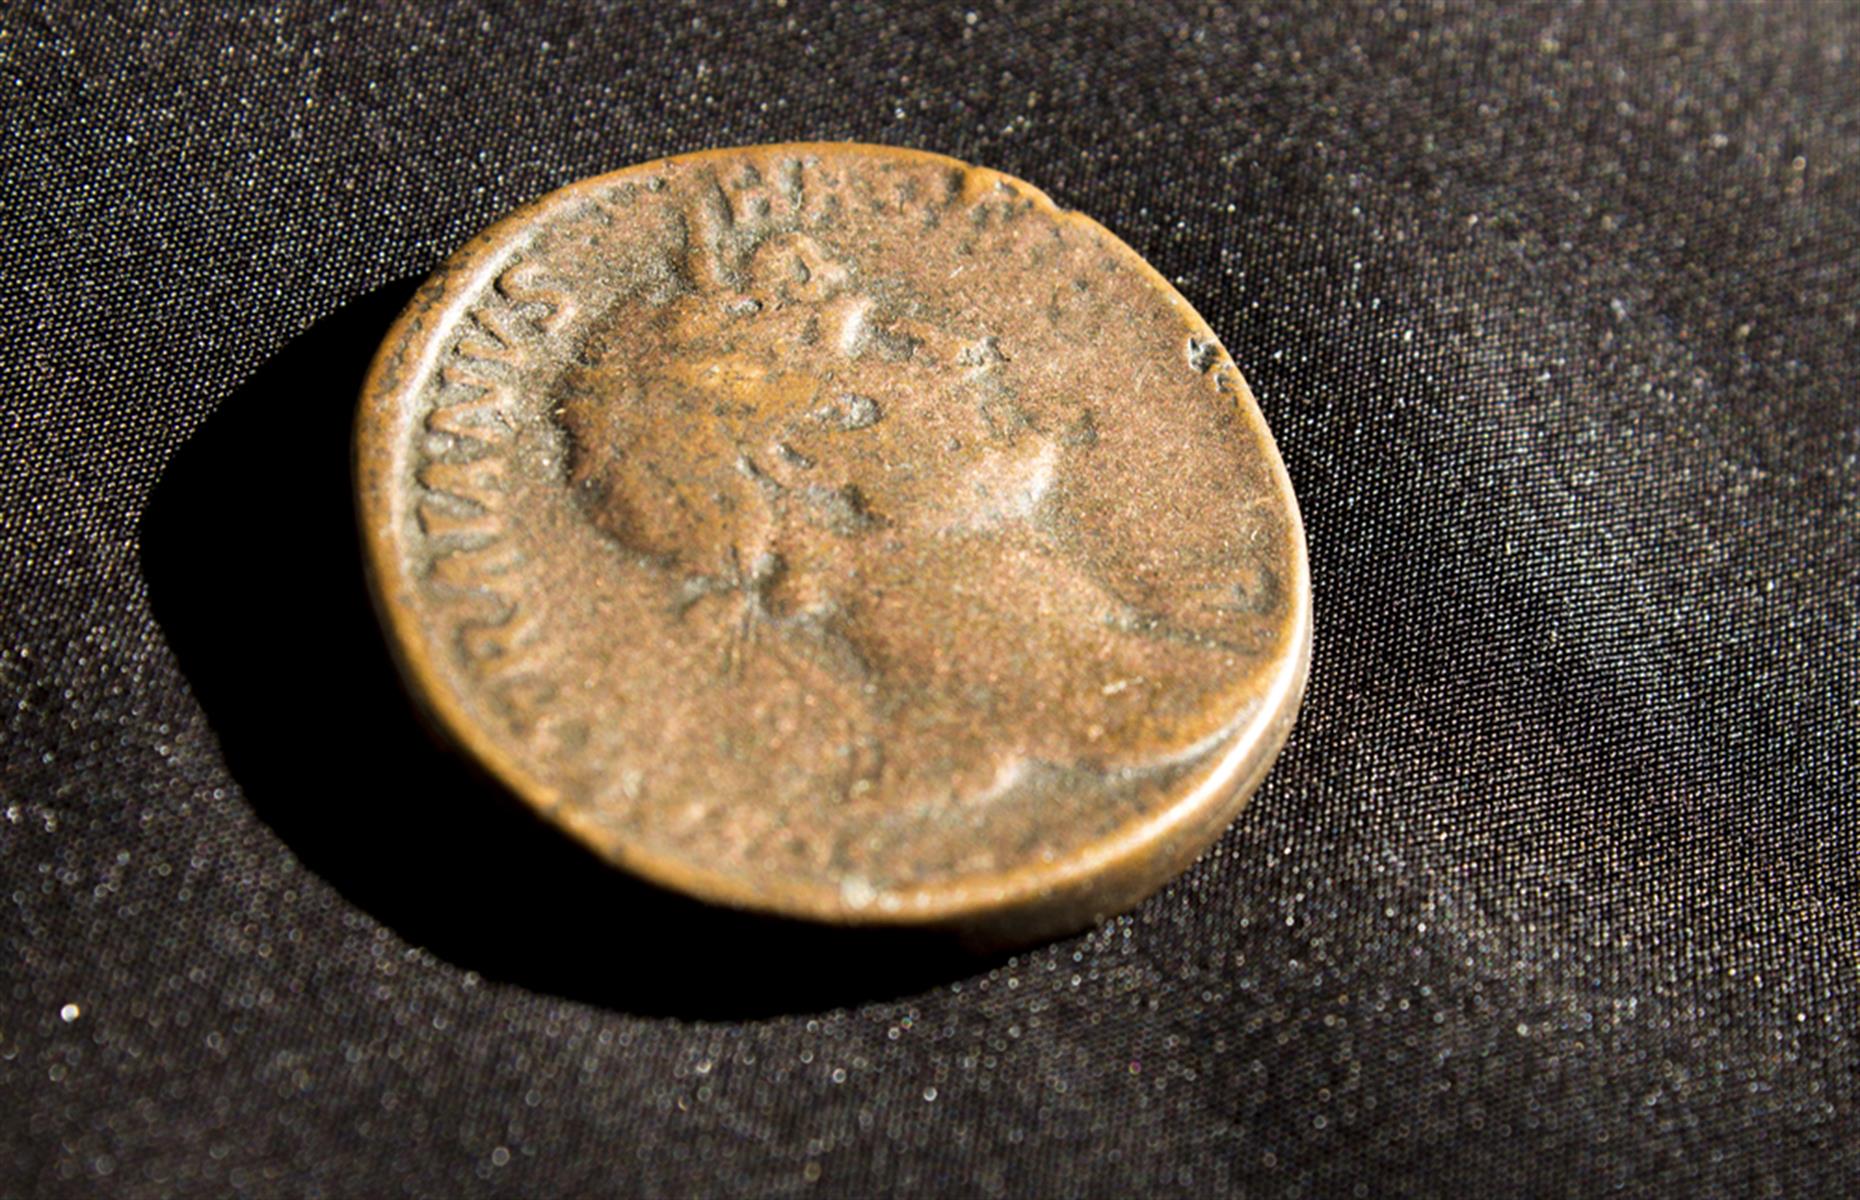 Roman coins in San Francisco